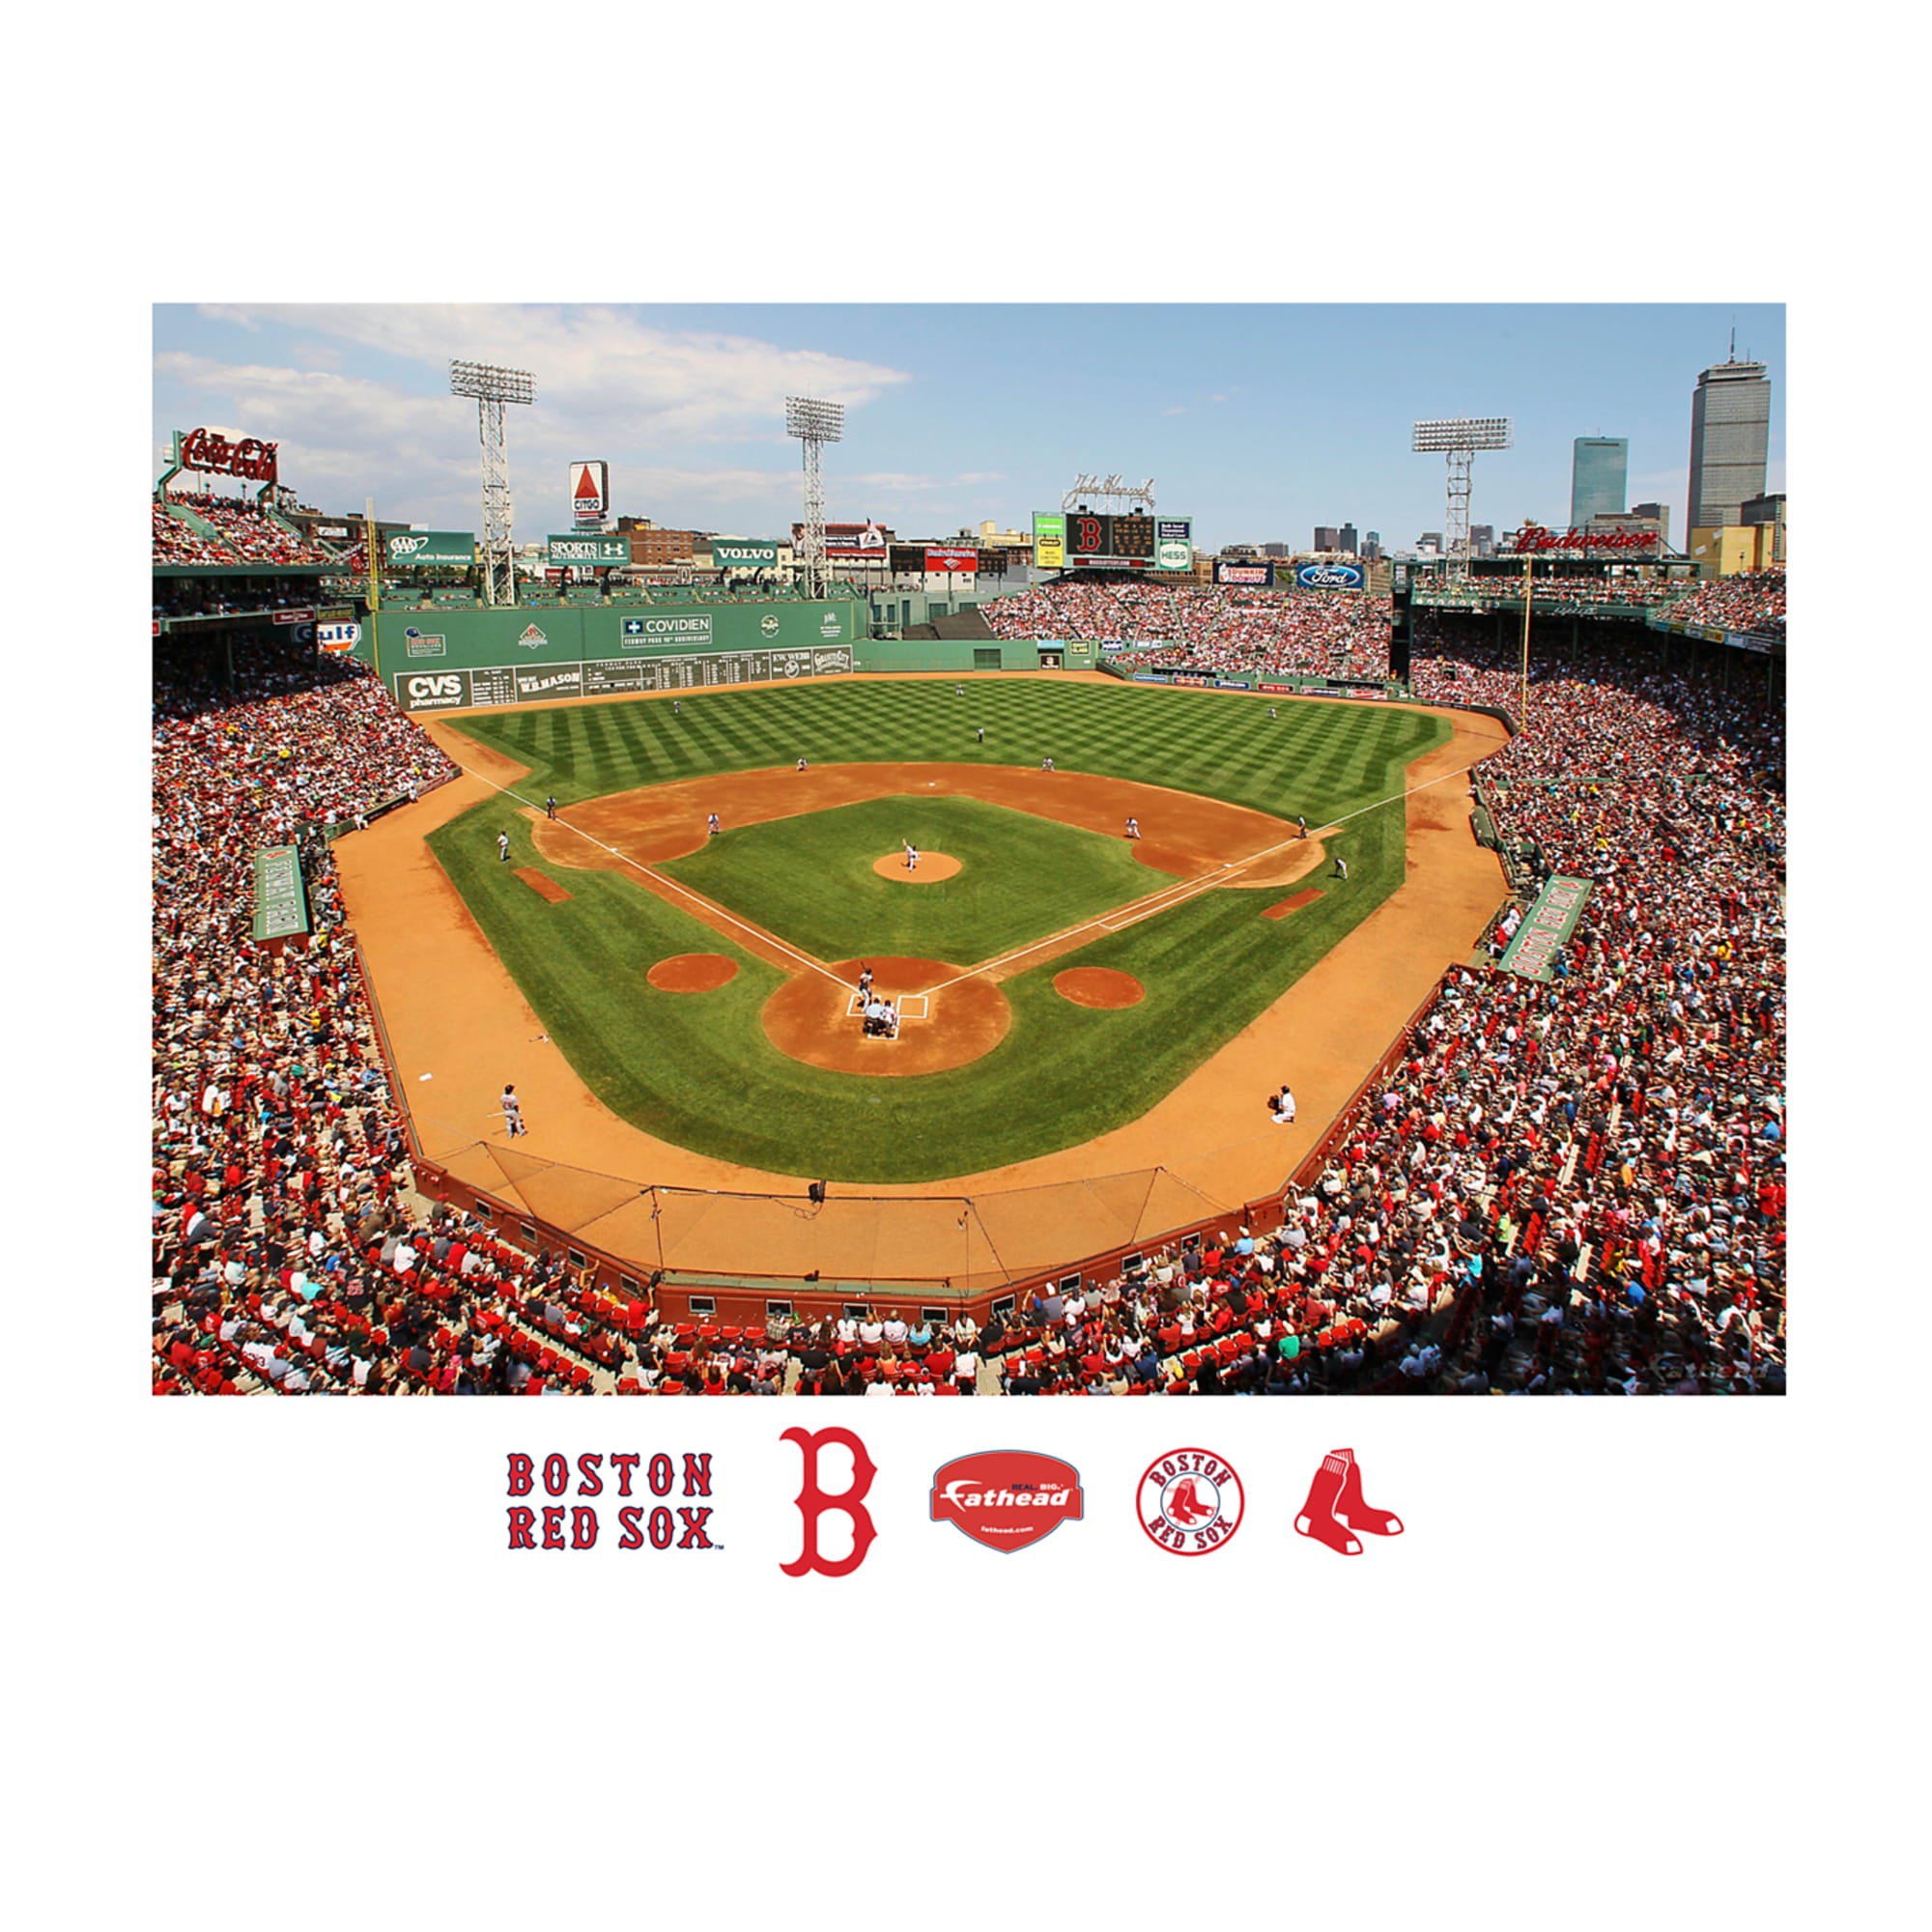 Boston Red Sox/Fenway Park Wall Mural, Sky Box Sports Scenes